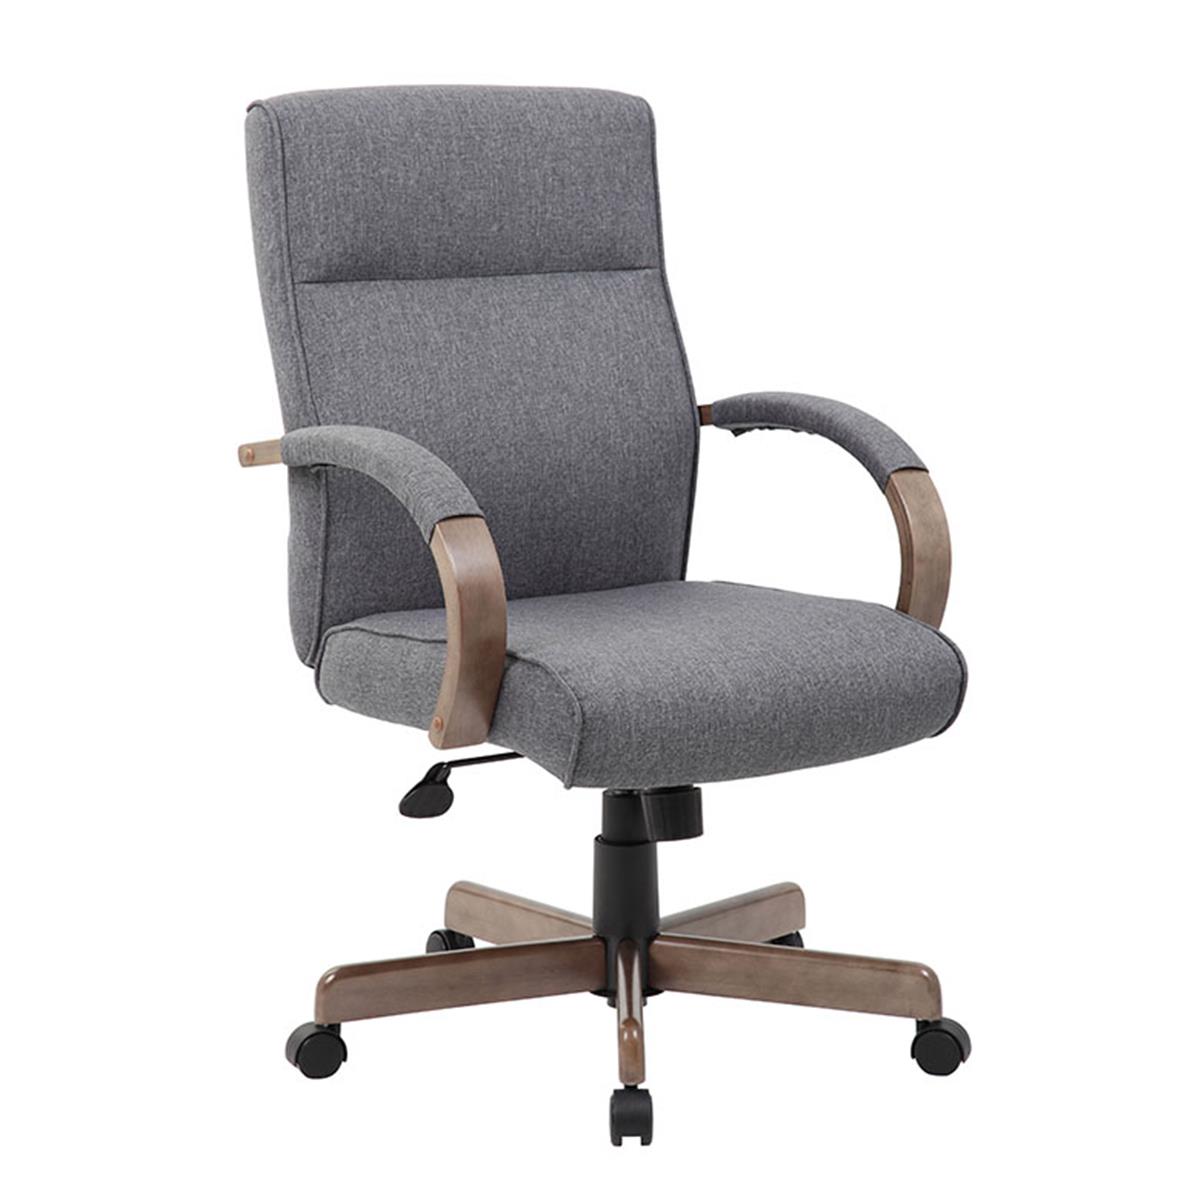 B696dw-sg Modern Executive Conference Chair - Slate Drift Wood, Grey